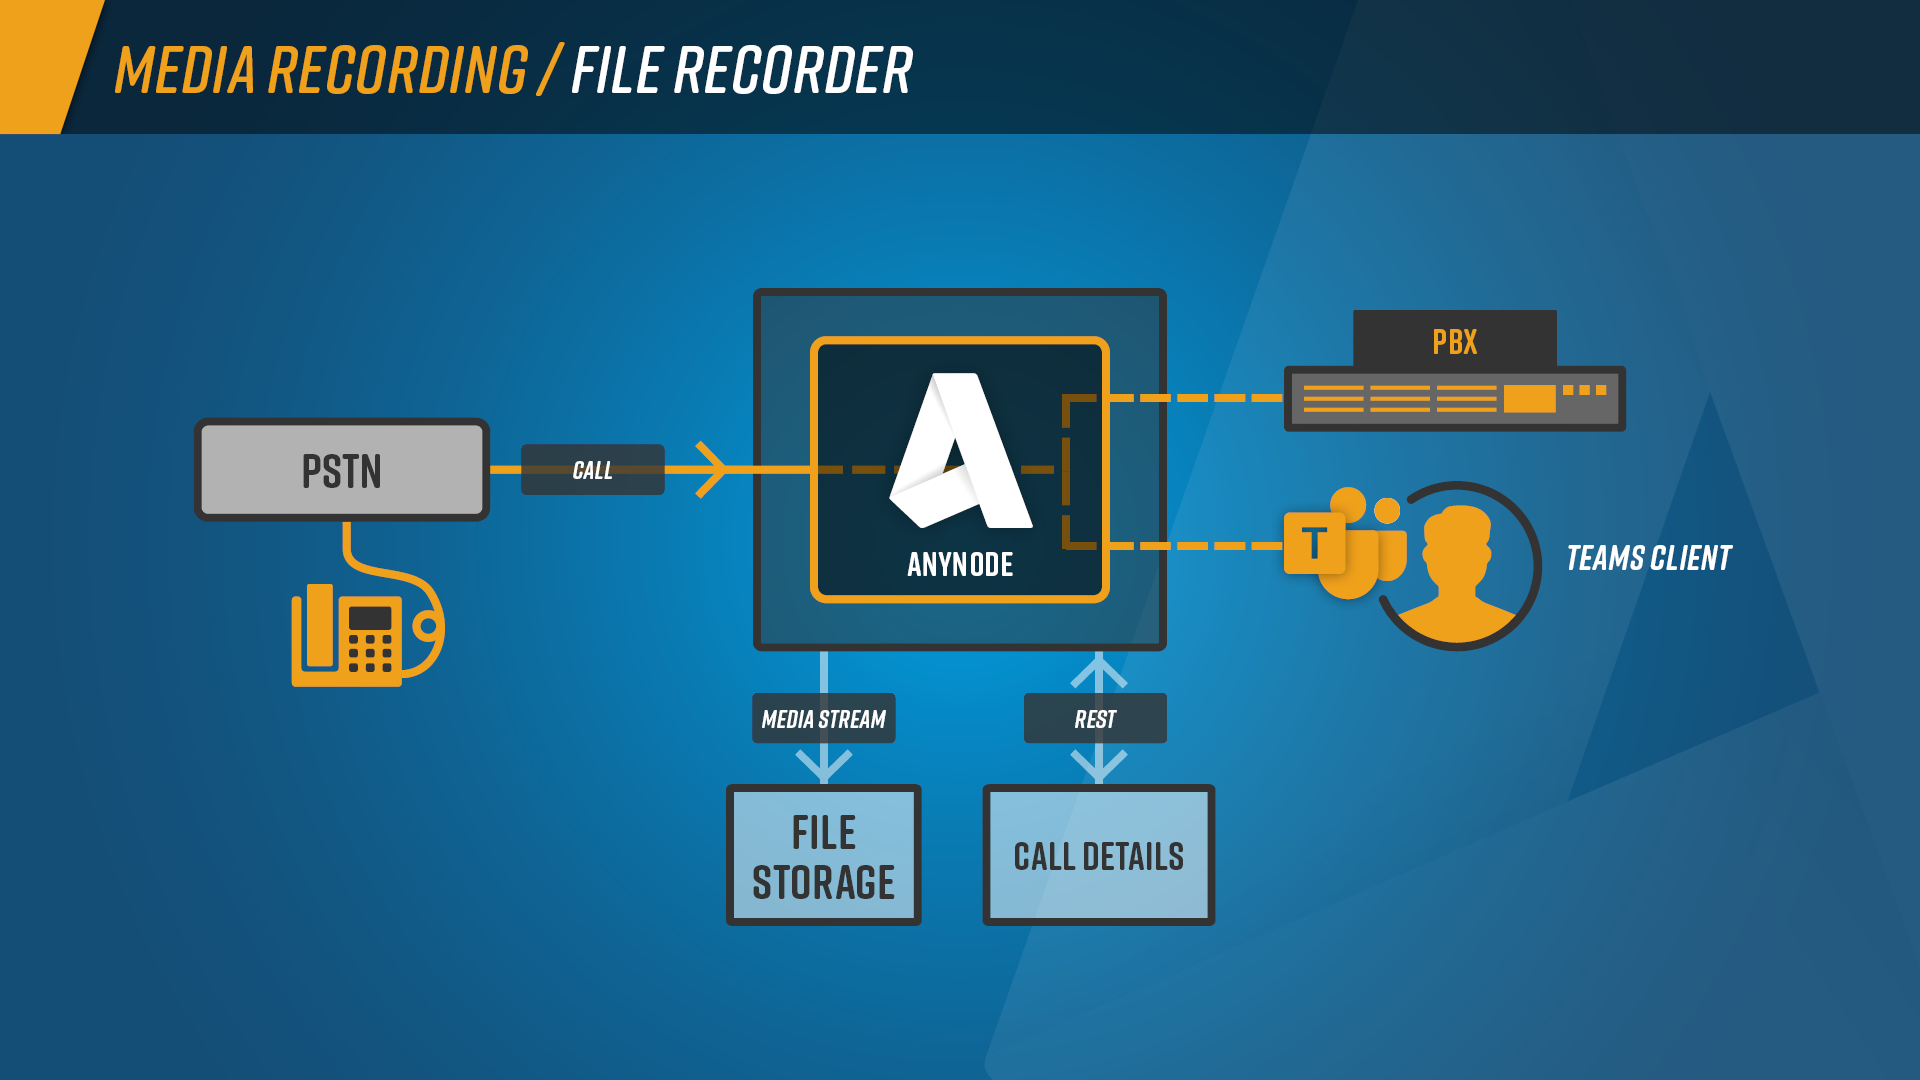 Media recording file recorder image